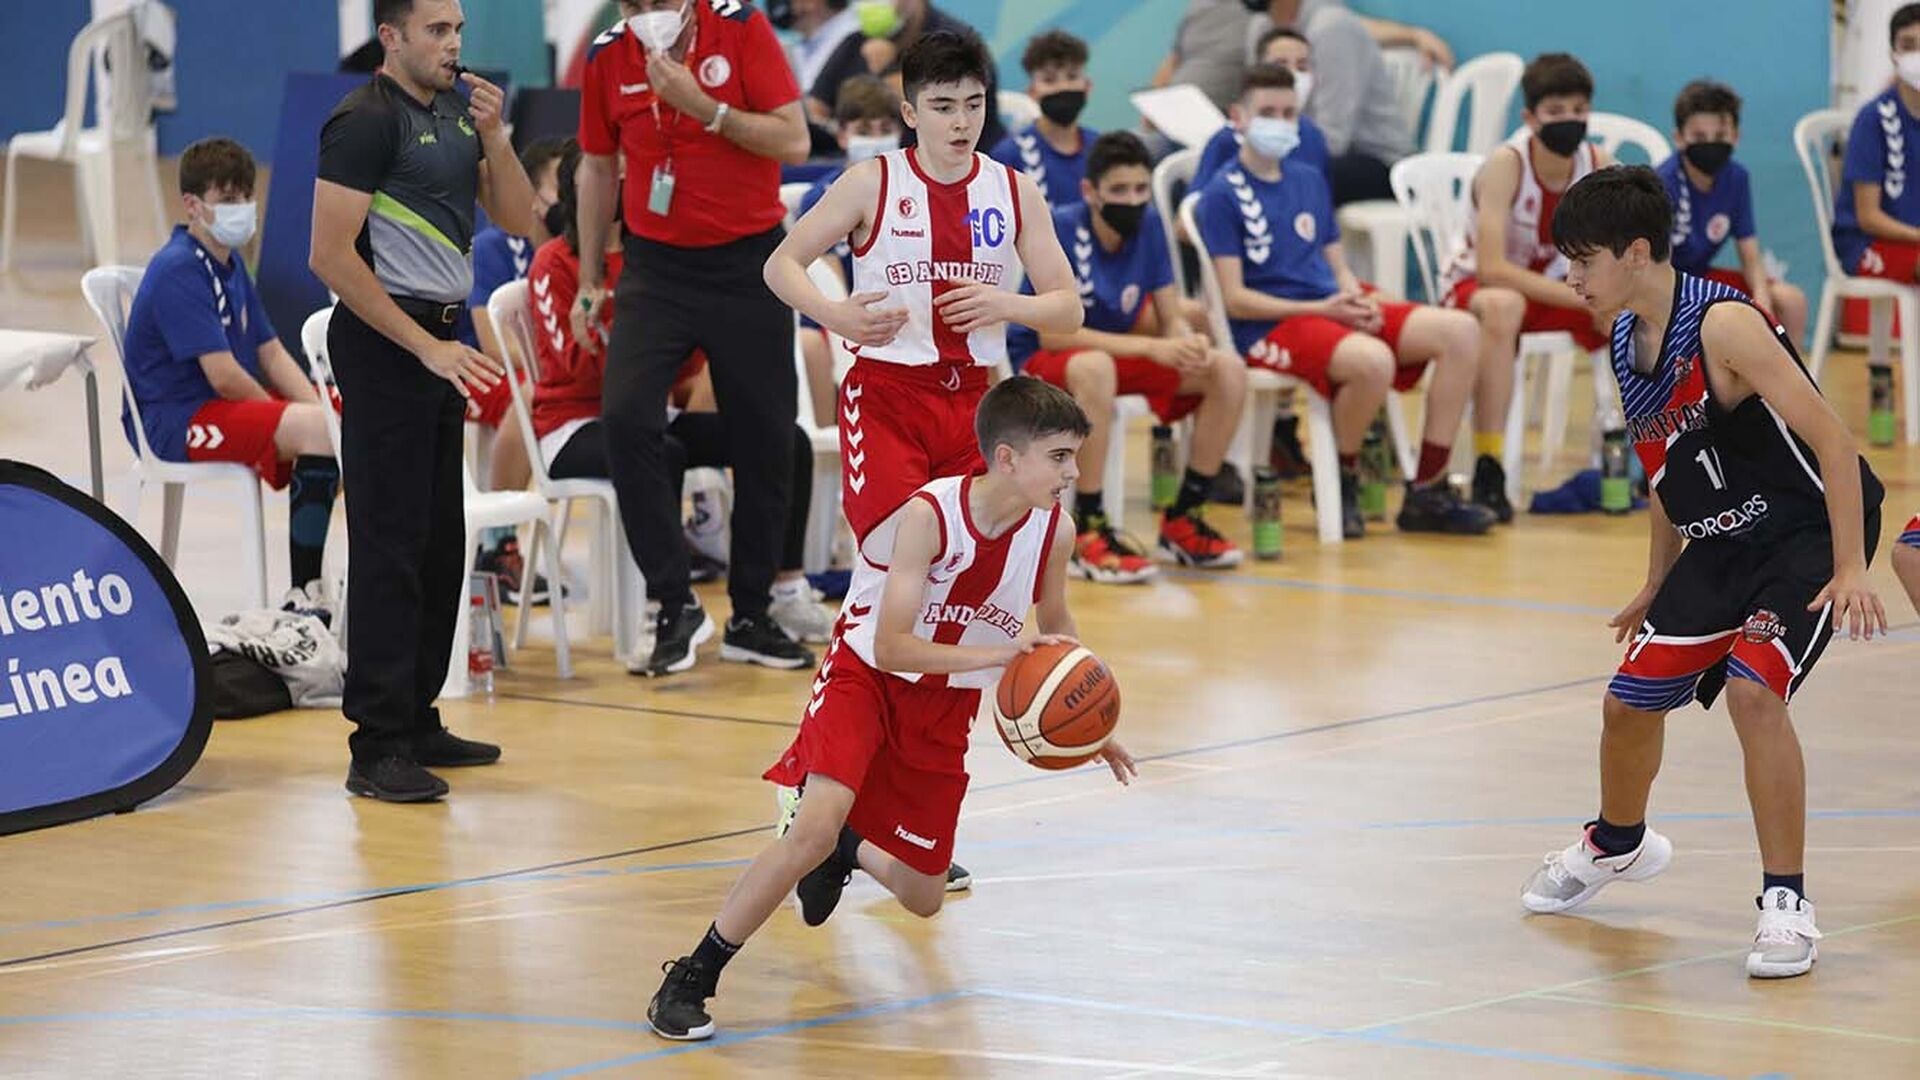 Las fotos del Campeonato de Andaluc&iacute;a de Baloncesto Infantil Masculino, celebrado en La L&iacute;nea